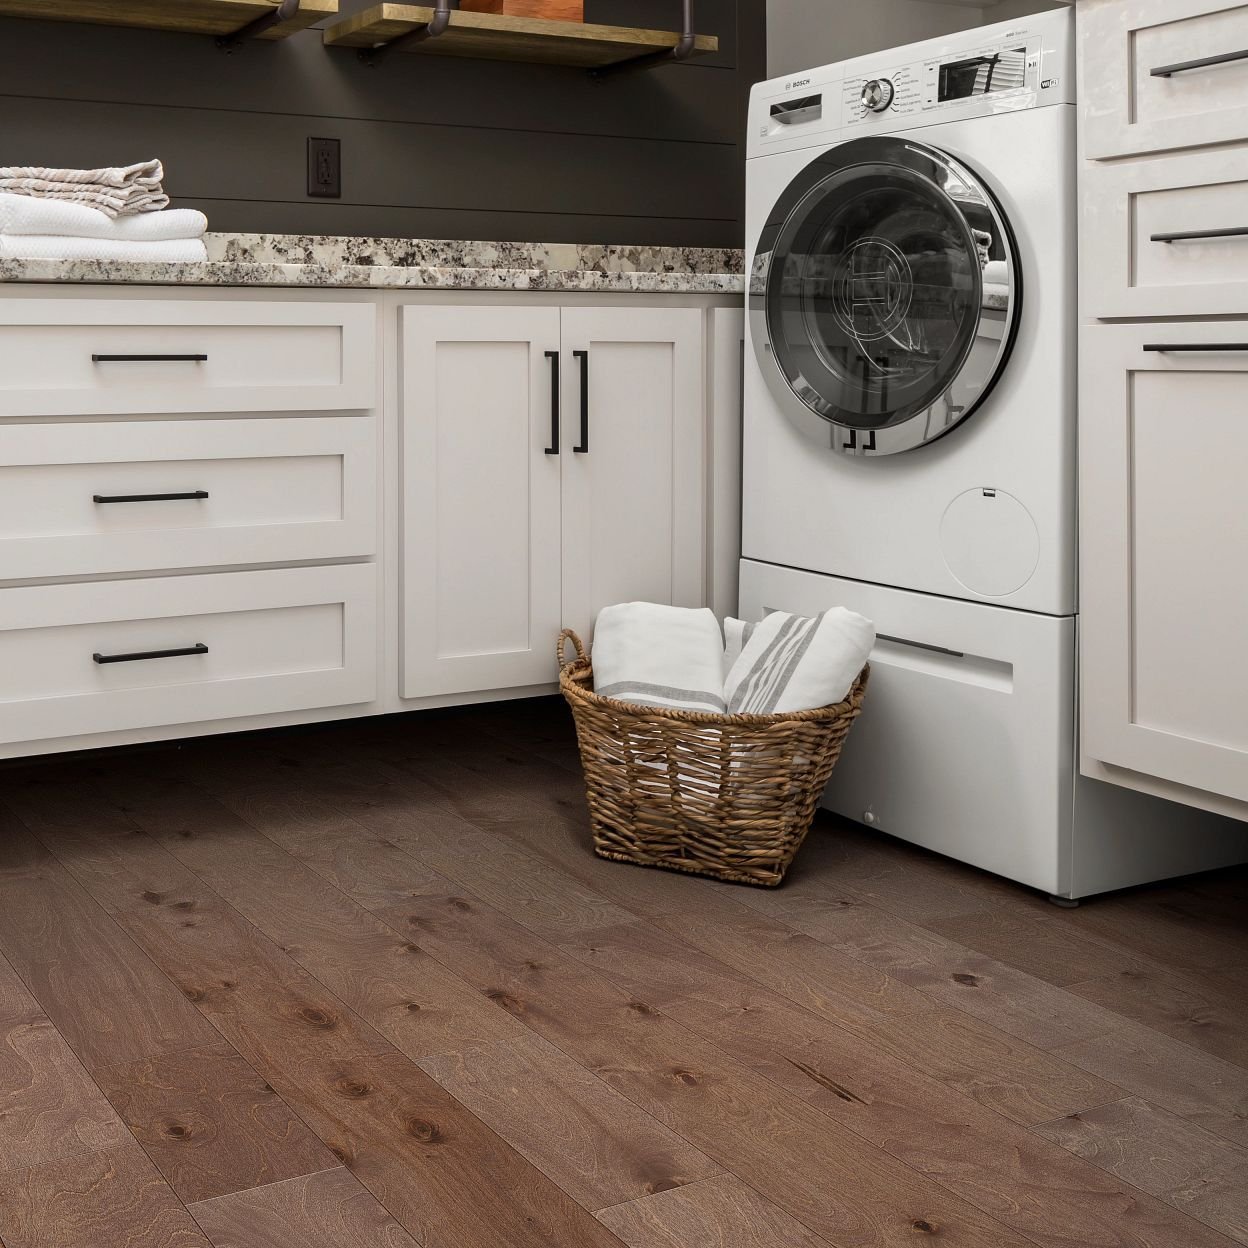 Brown hardwood floor for laundry room from Dishman Flooring on Houma, LA area